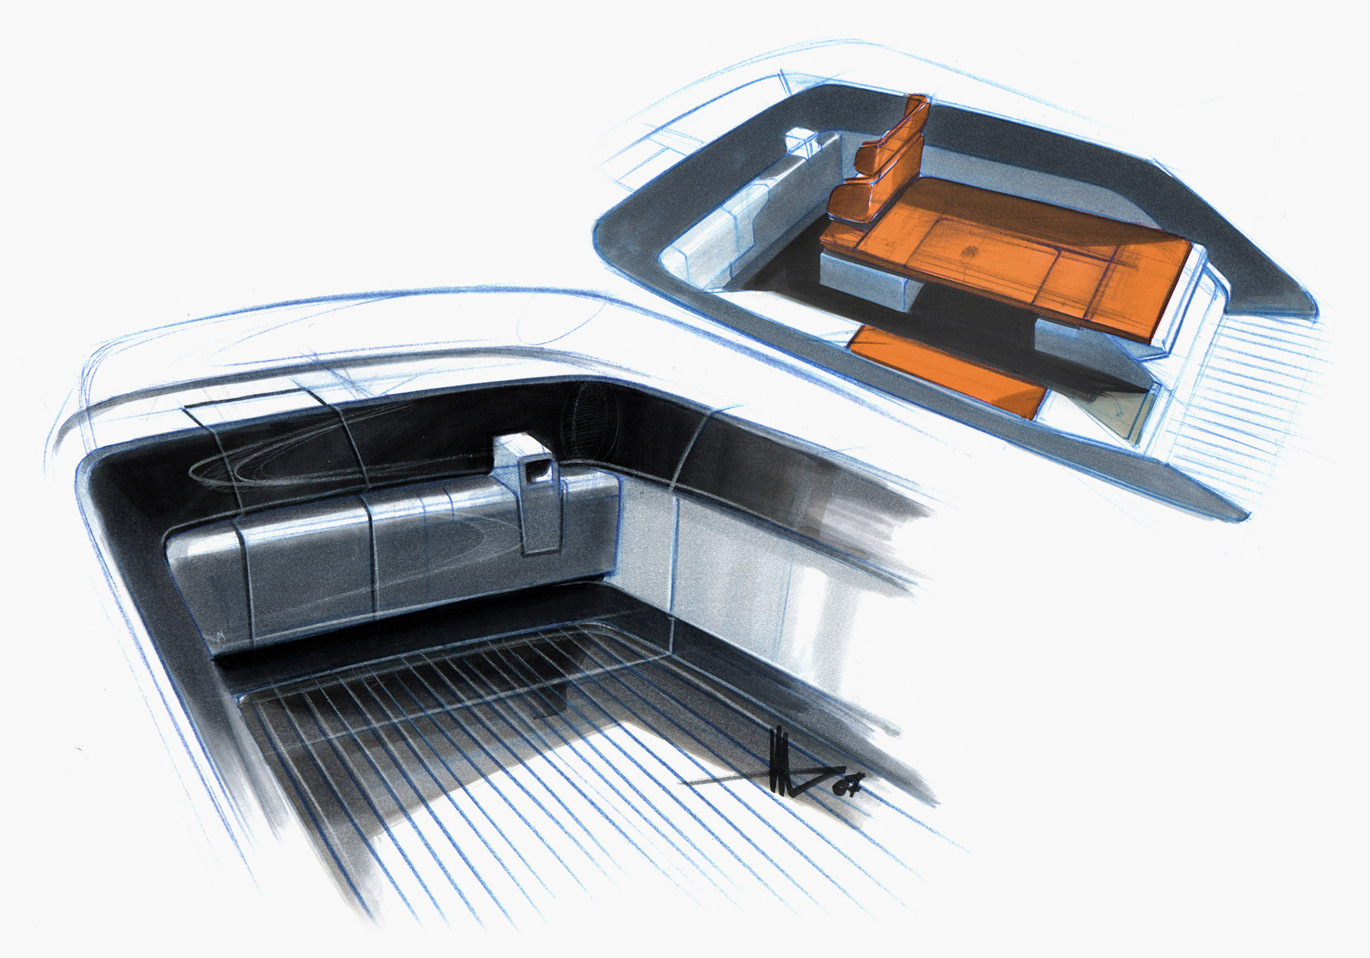 Yacht design - 40 Feet - Power boat - Concept sketch3a - Davide Mezzasalma - Furniture design - Berlin